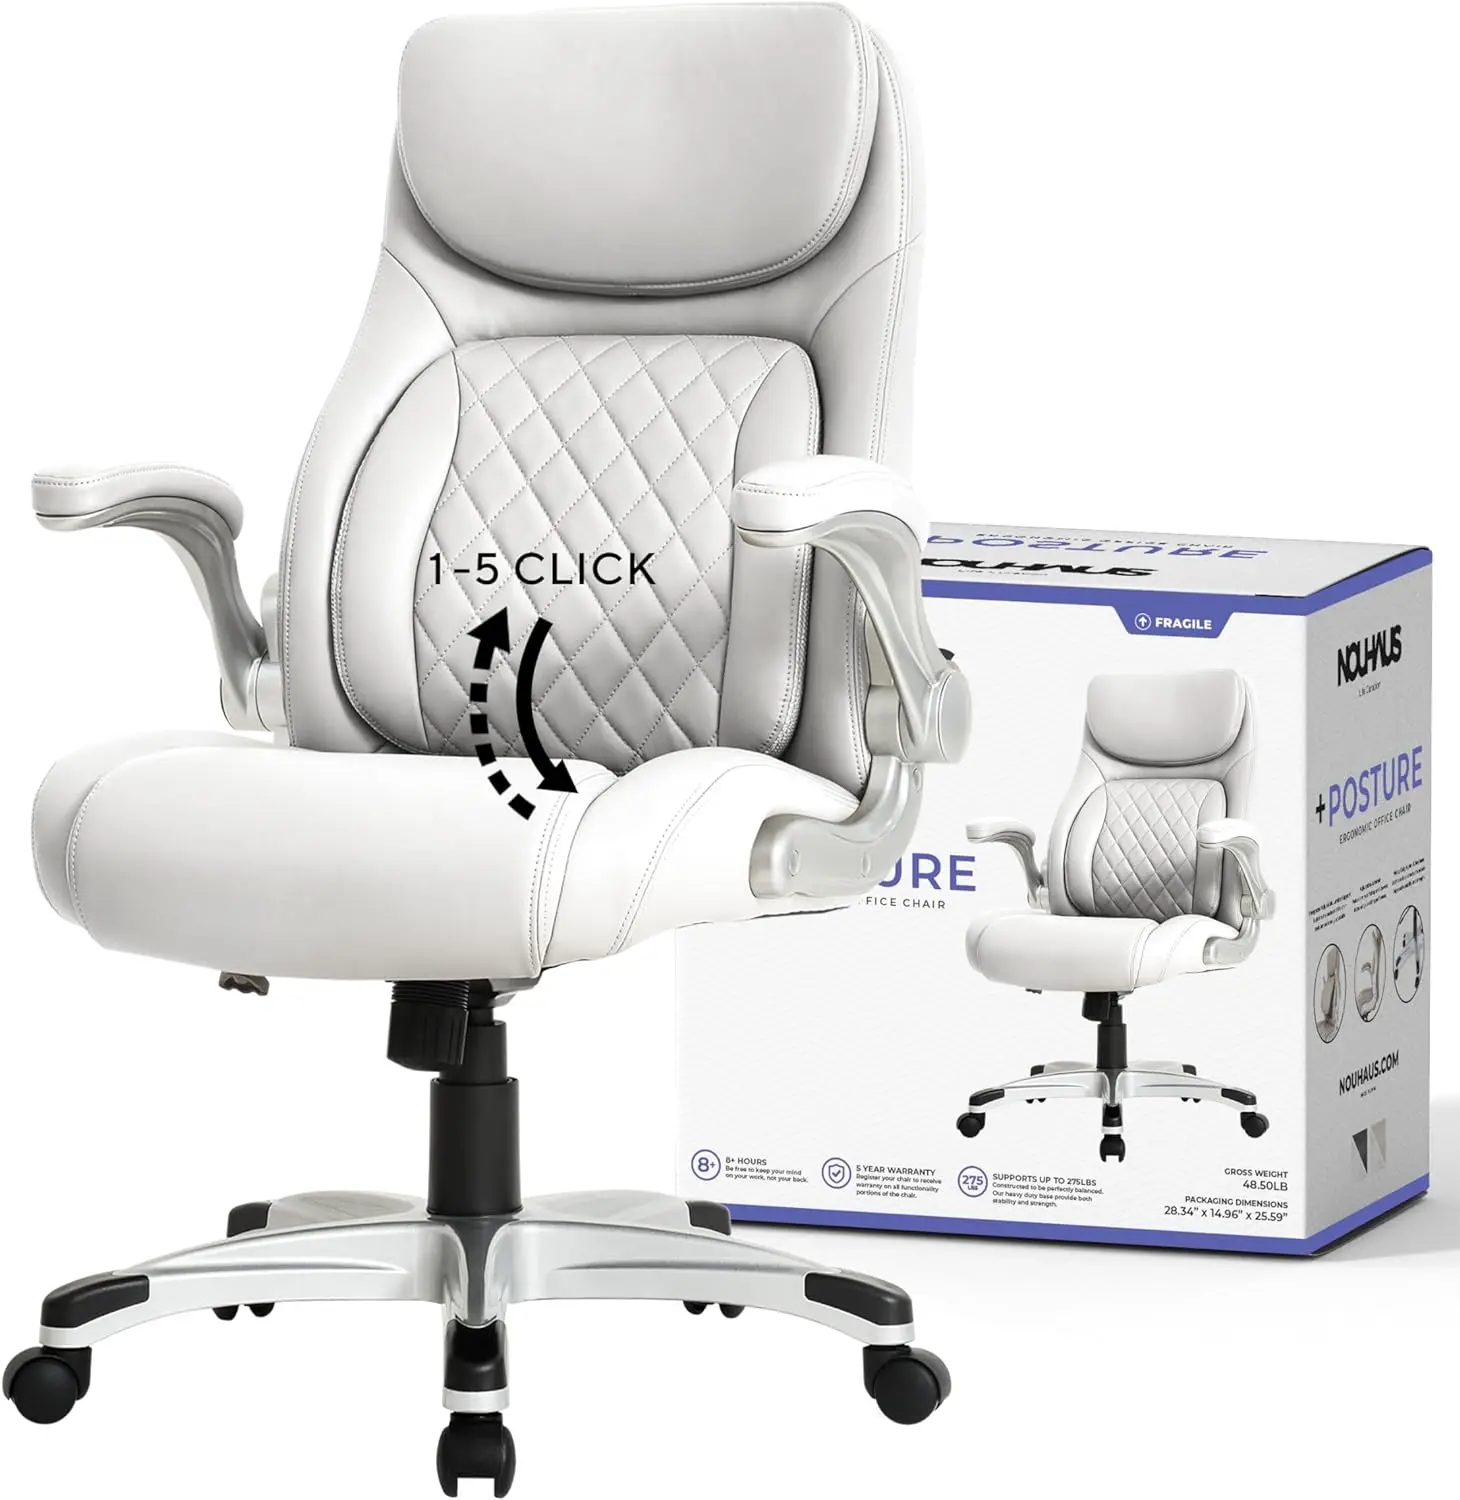 

Nouhaus +Posture Ergonomic PU Leather Office Chair. Click5 Lumbar Support with FlipAdjust Armrests.